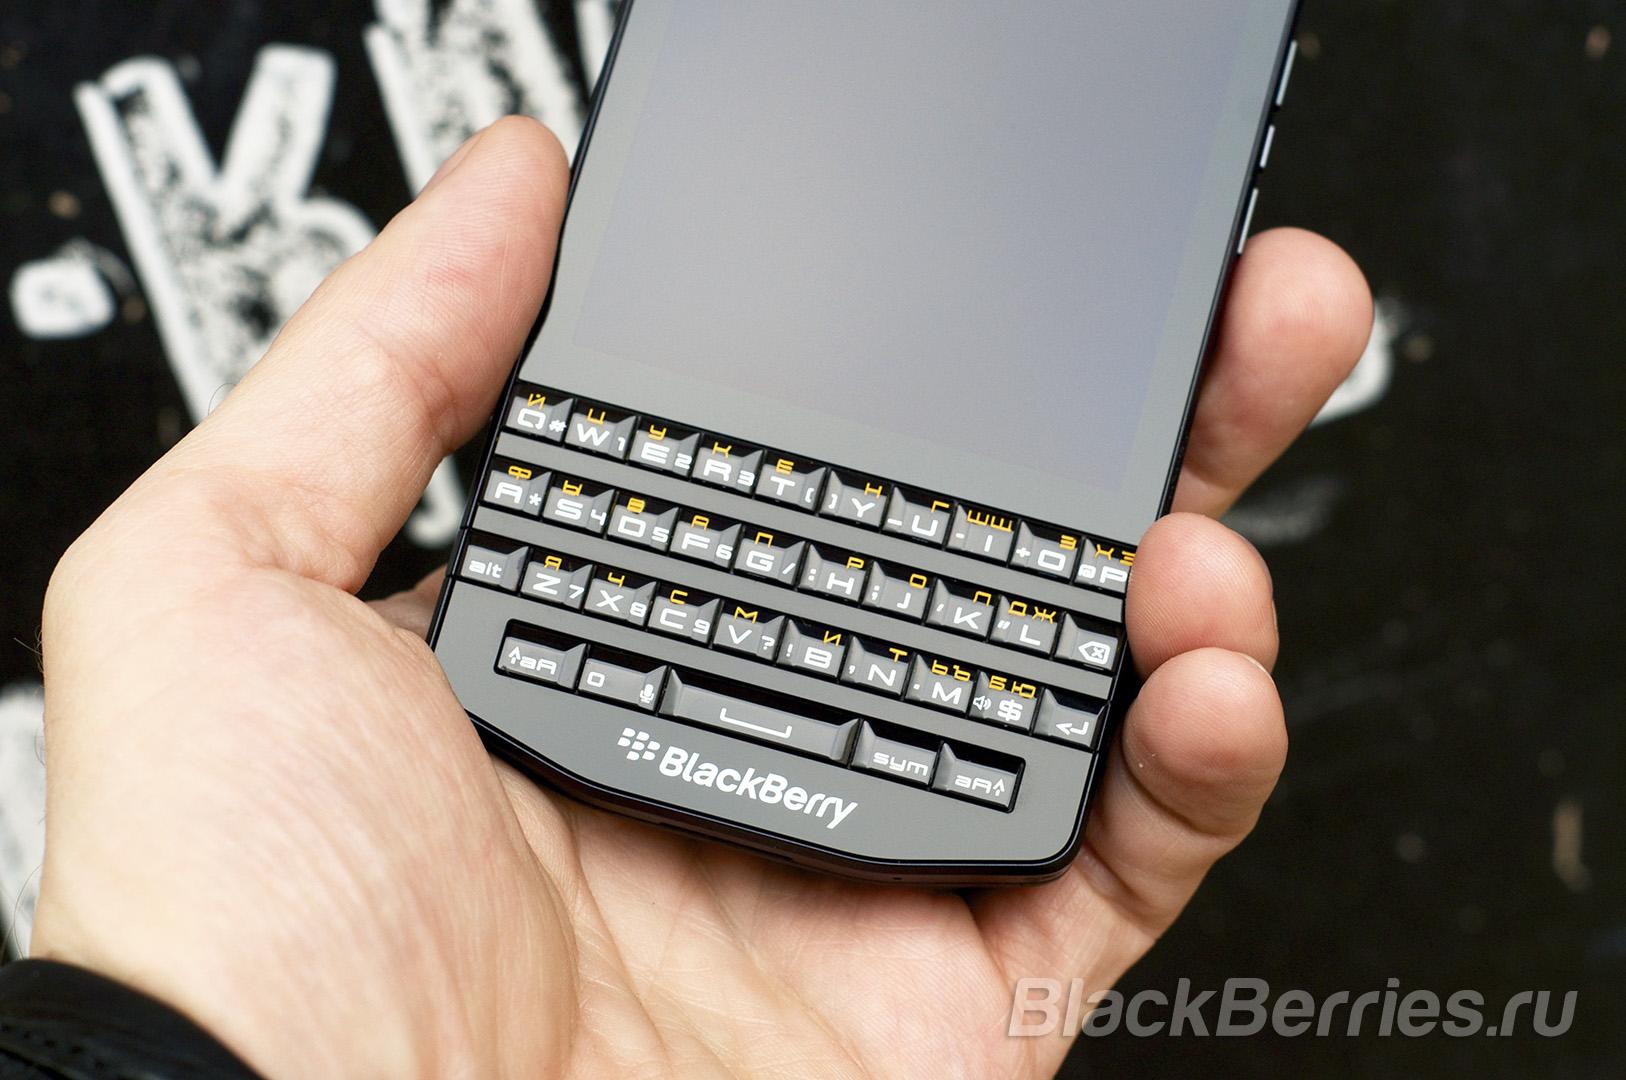 BlackBerry-P9983-Graphite-RUS-5